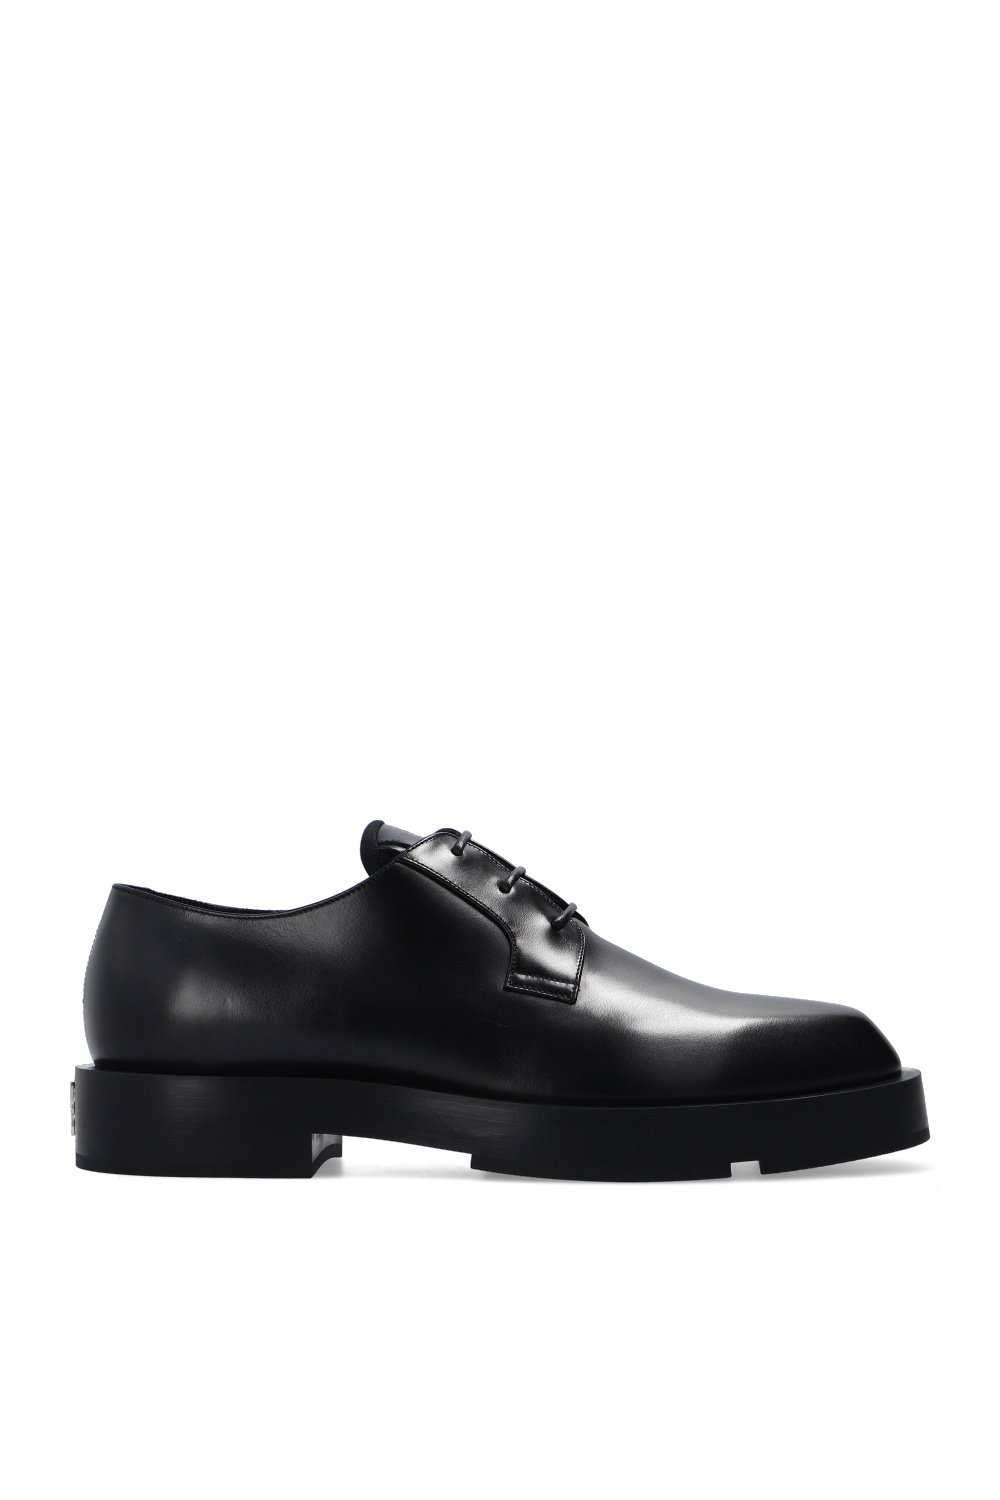 Vic Matie lace-up leather derby shoes - Black